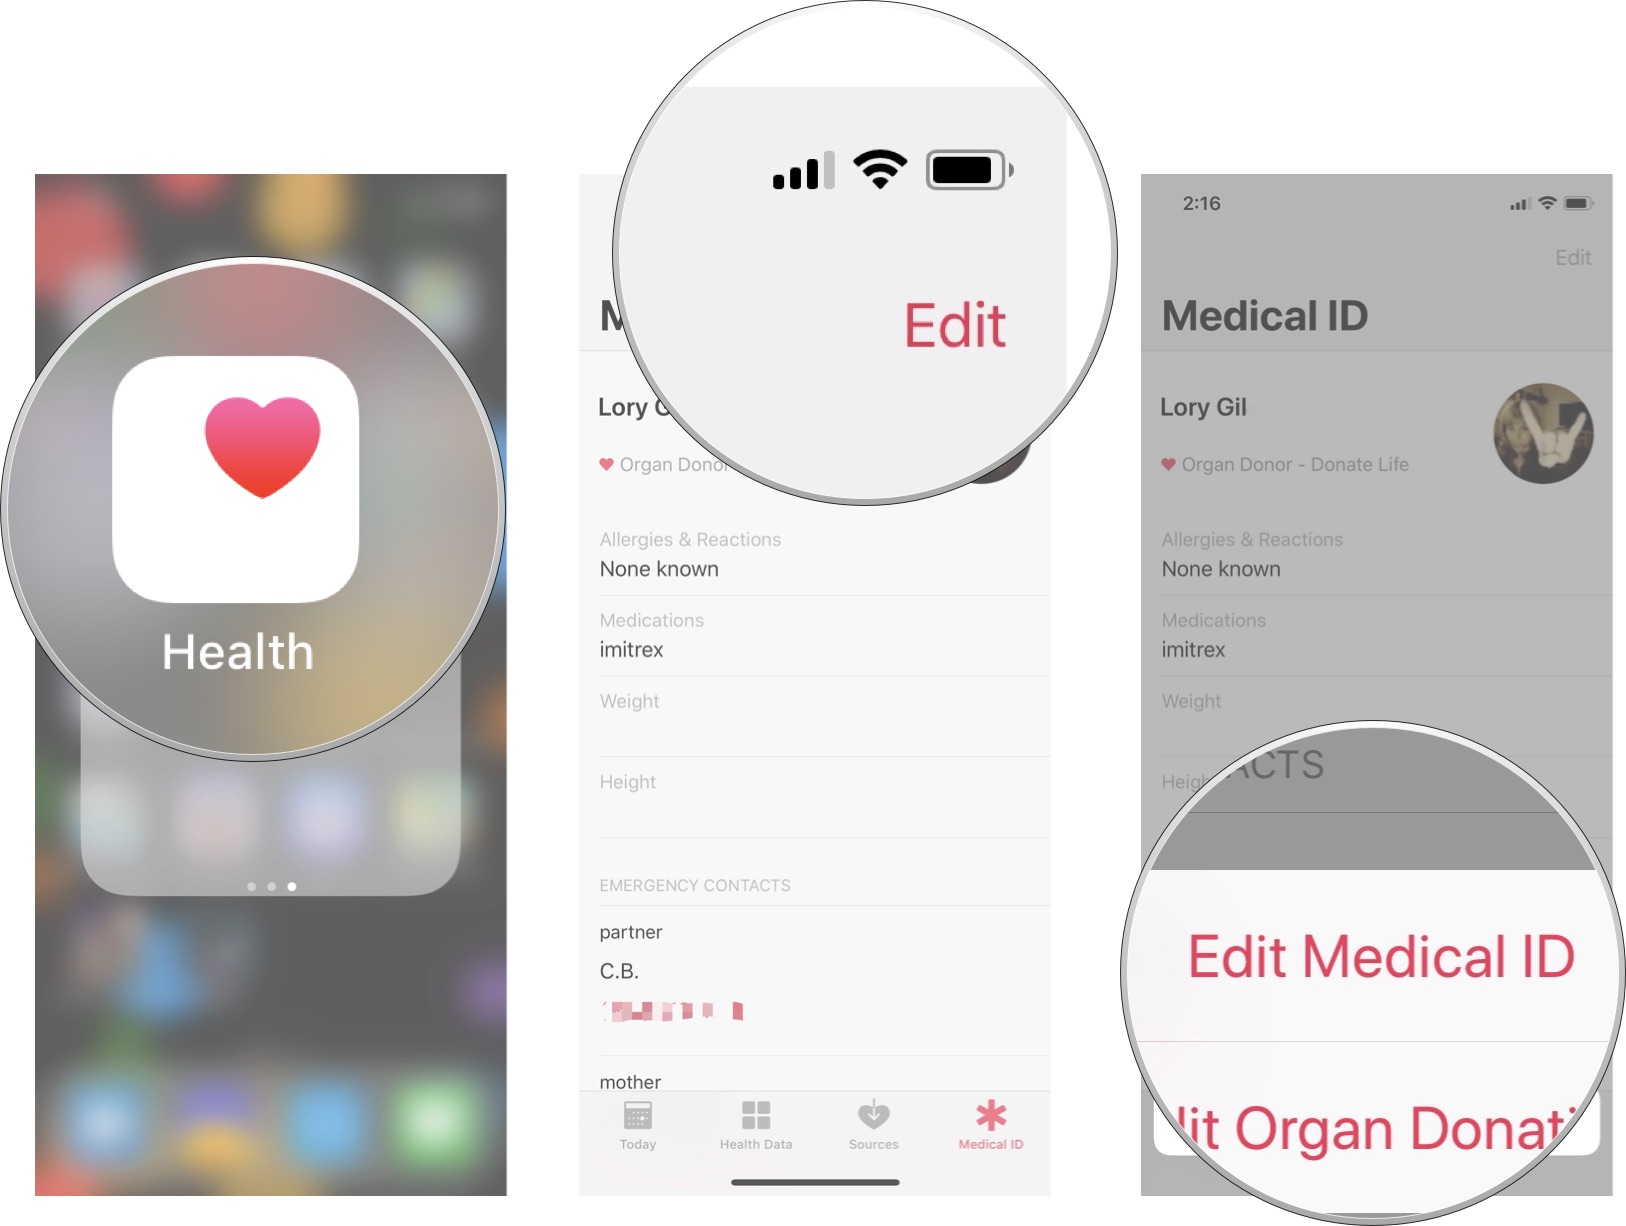 Open Health app, tap Edit, tap Edit Medical ID